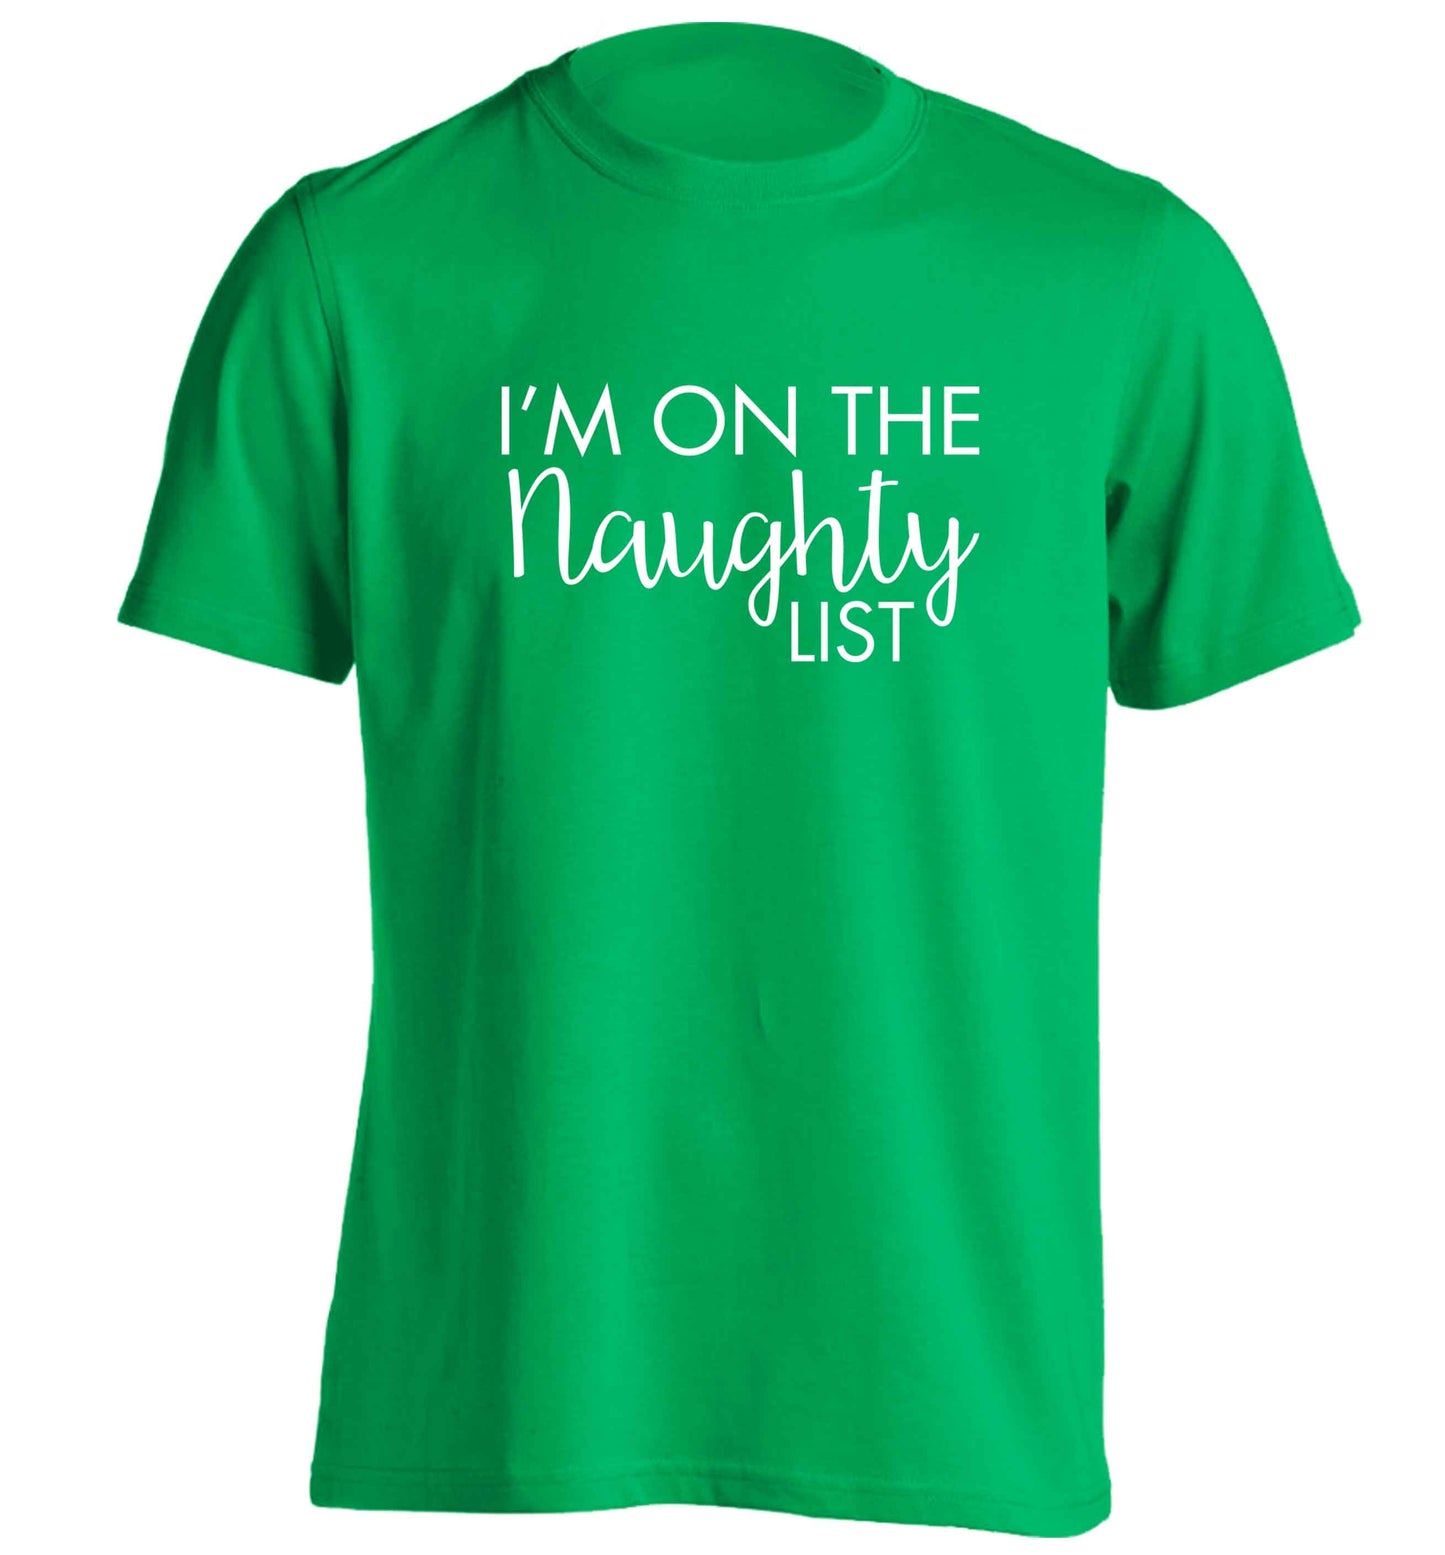 I'm on the naughty list adults unisex green Tshirt 2XL